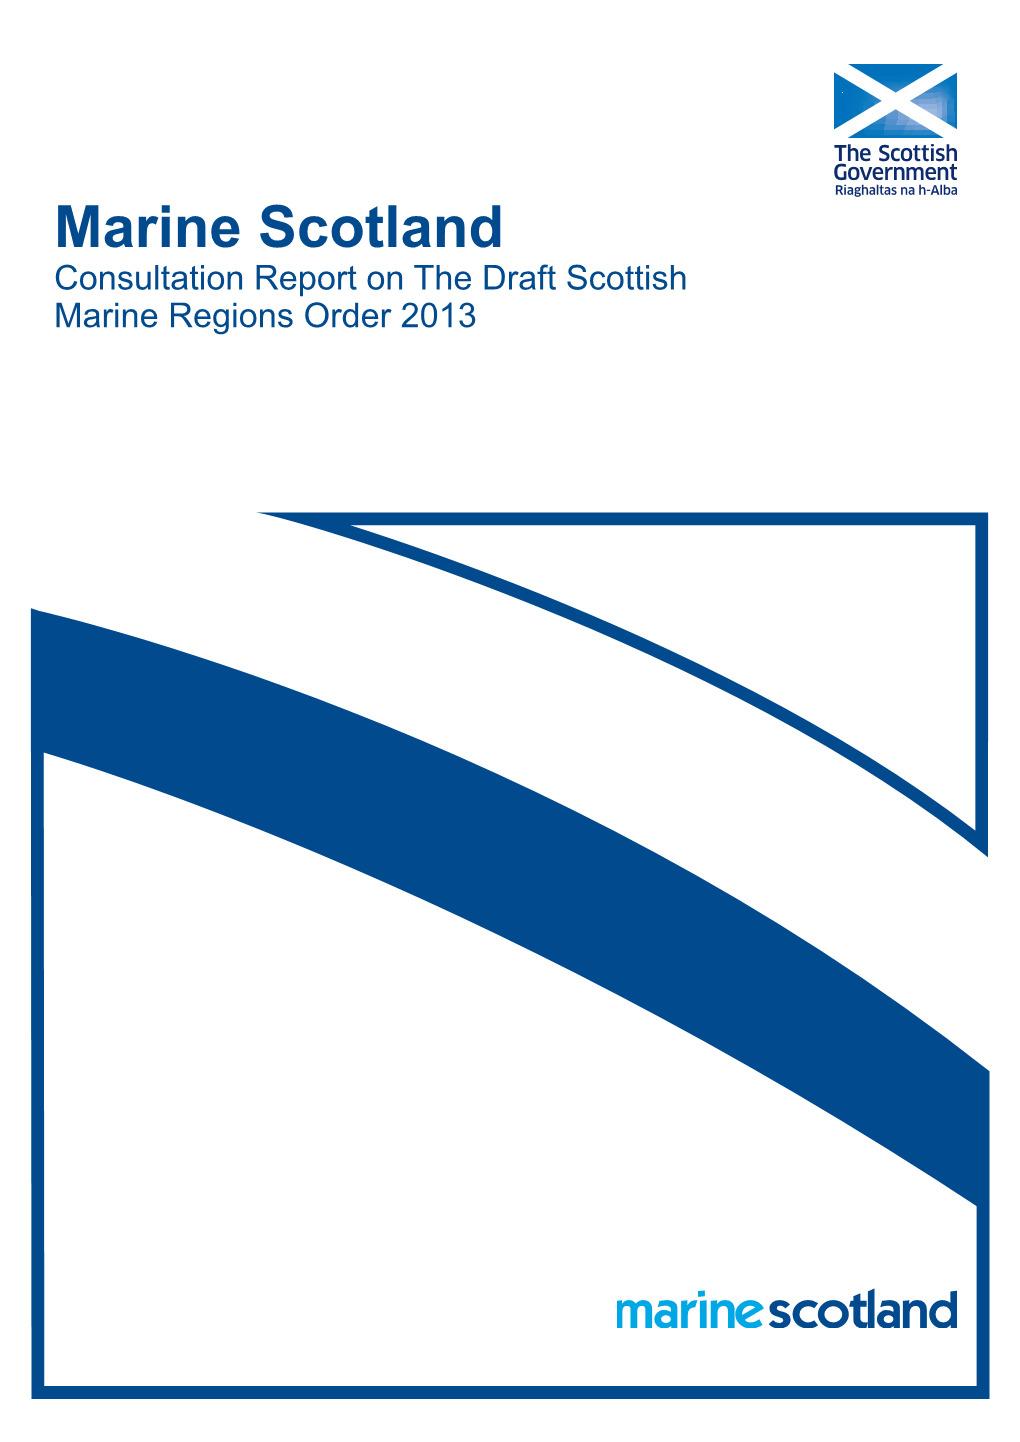 Consulation Report on the Draft Scottish Marine Regions Order 2013